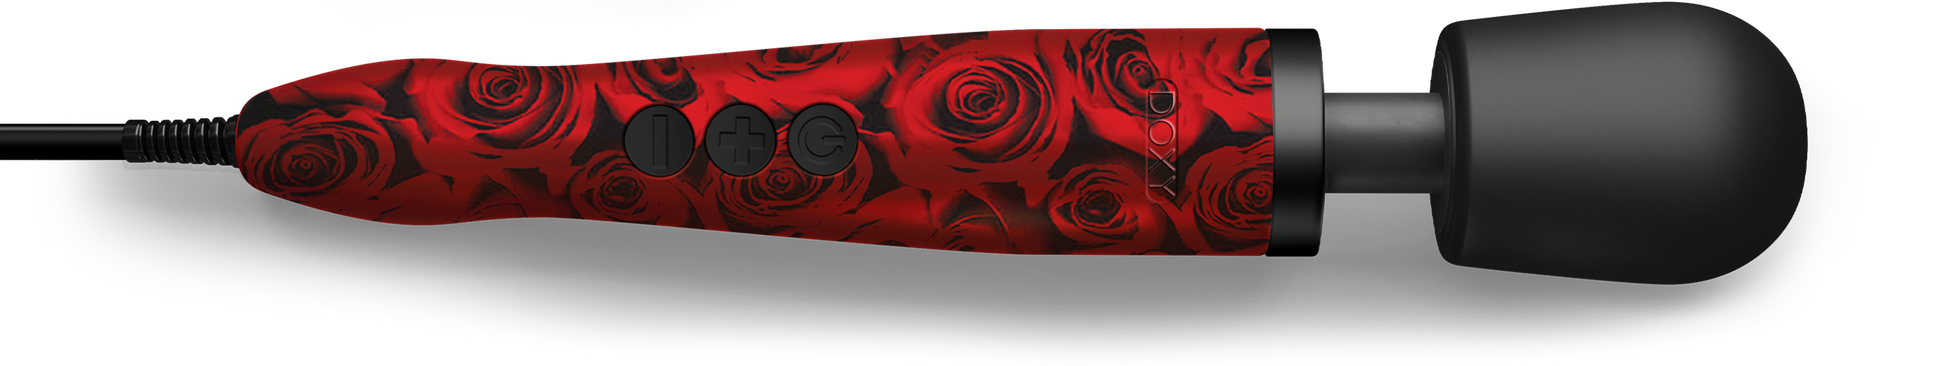 The rose Doxy Full Size Original Wand Vibrator.